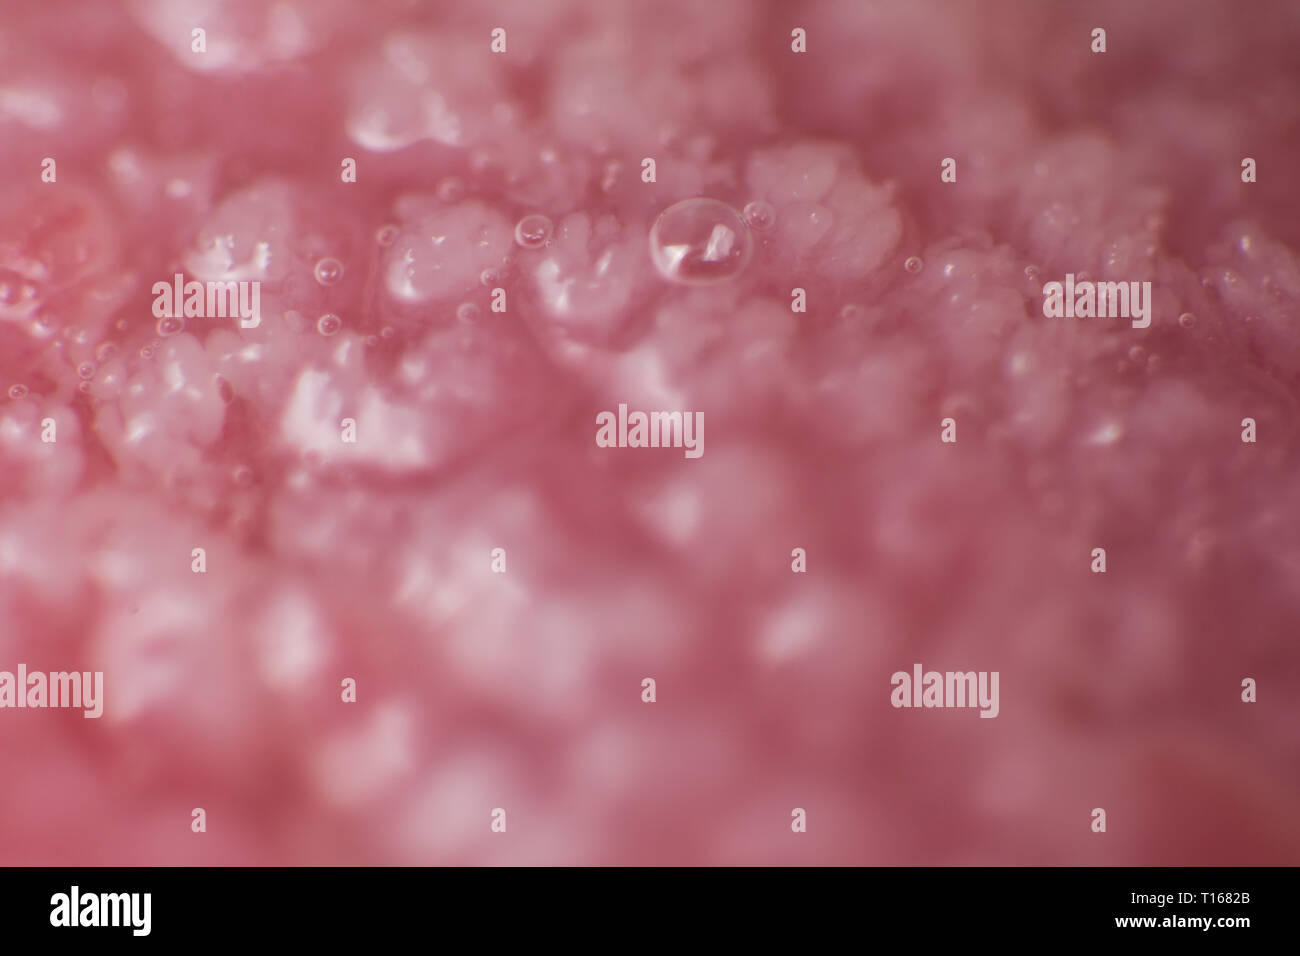 Super macro surface of tongue candidiasis overgrowth Stock Photo